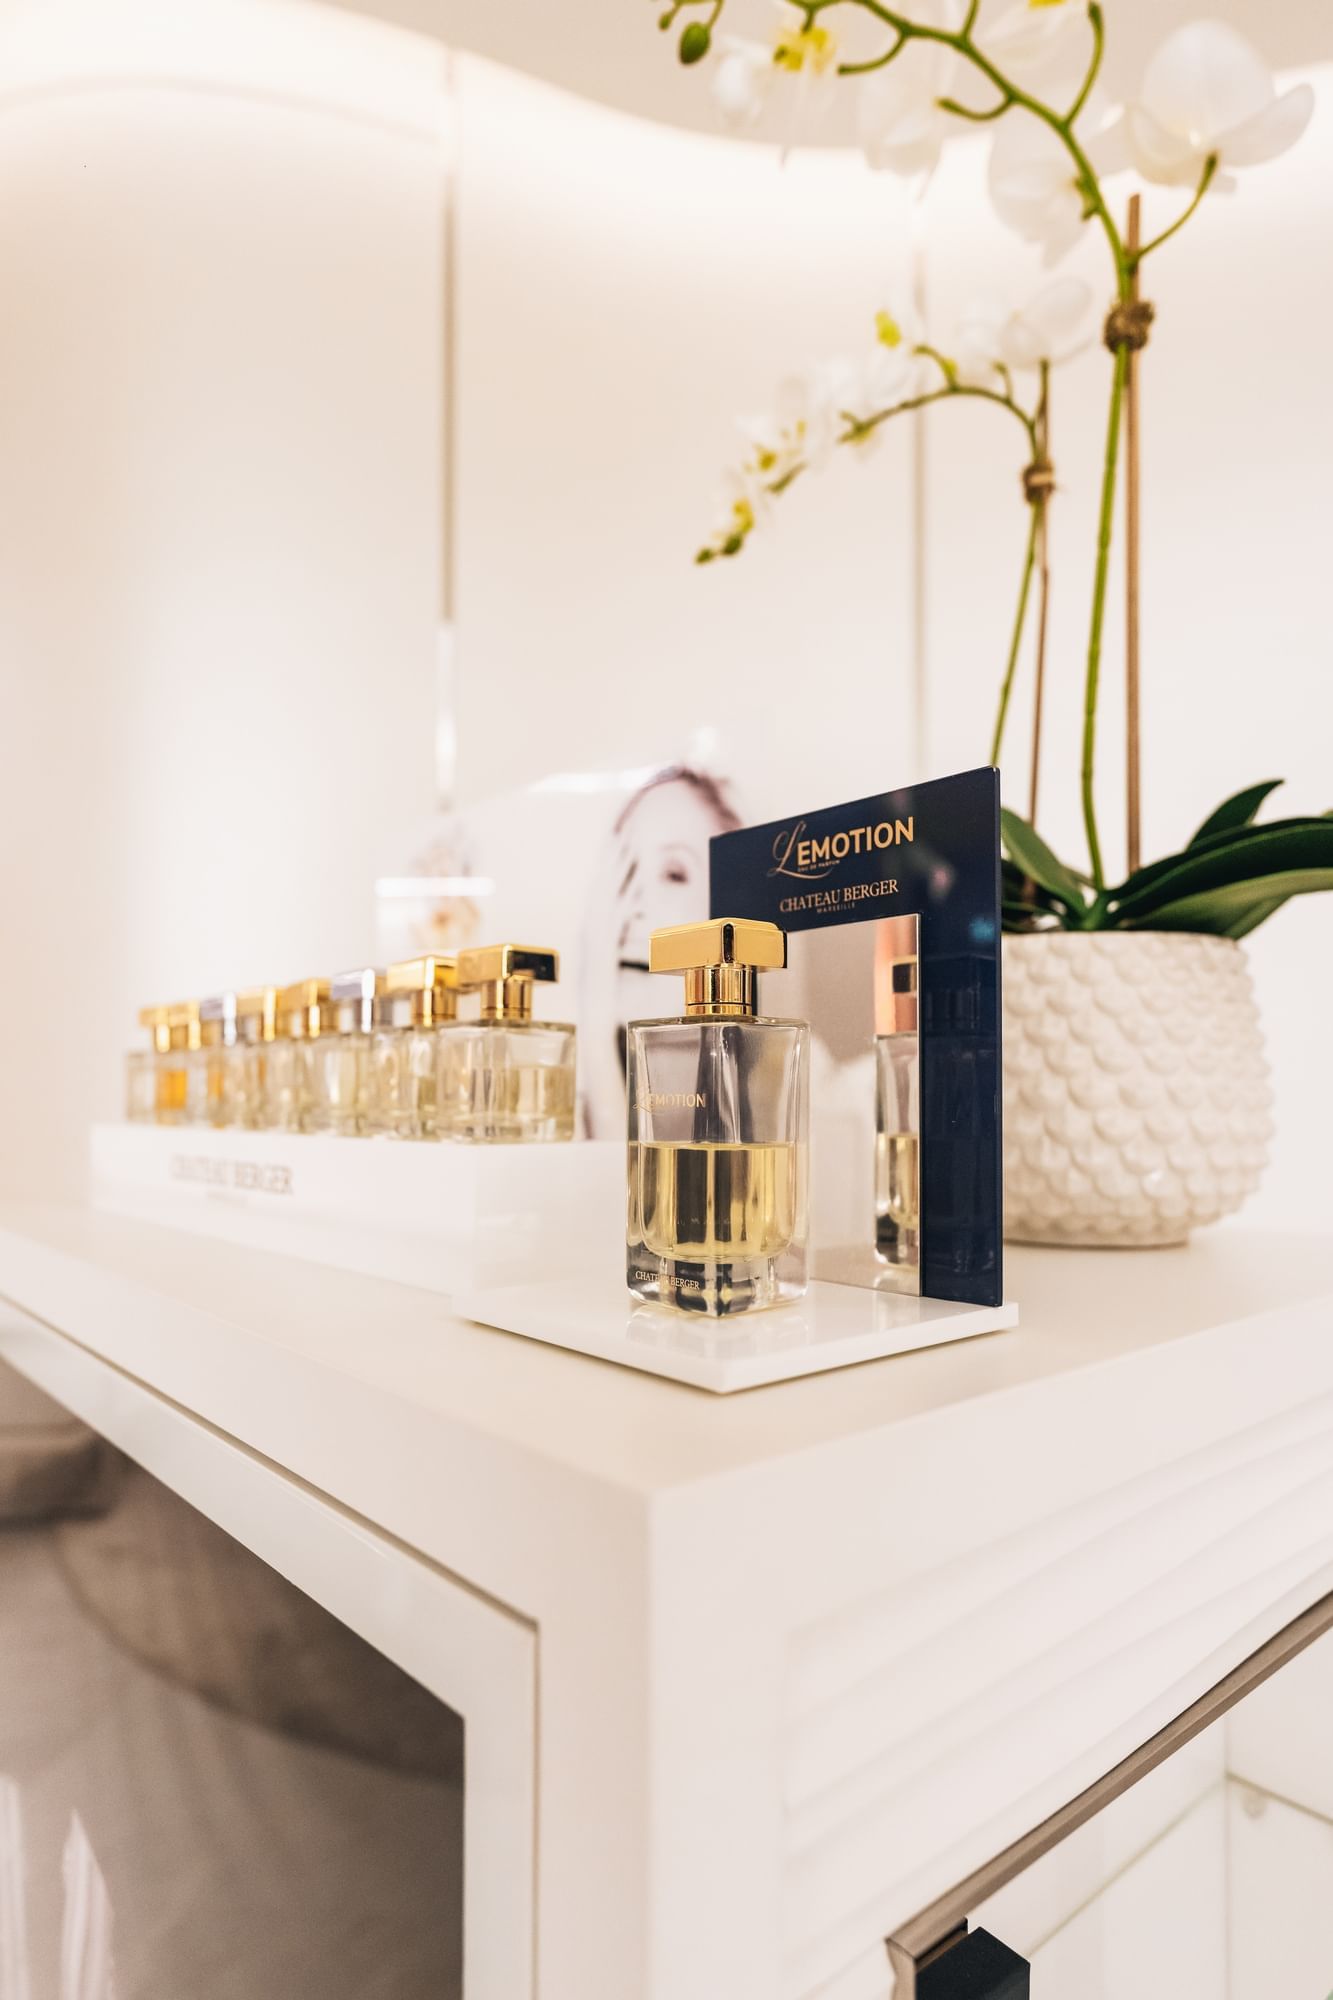 L'Émotion perfumes by Chateau Berger at Paramount Hotel Dubai